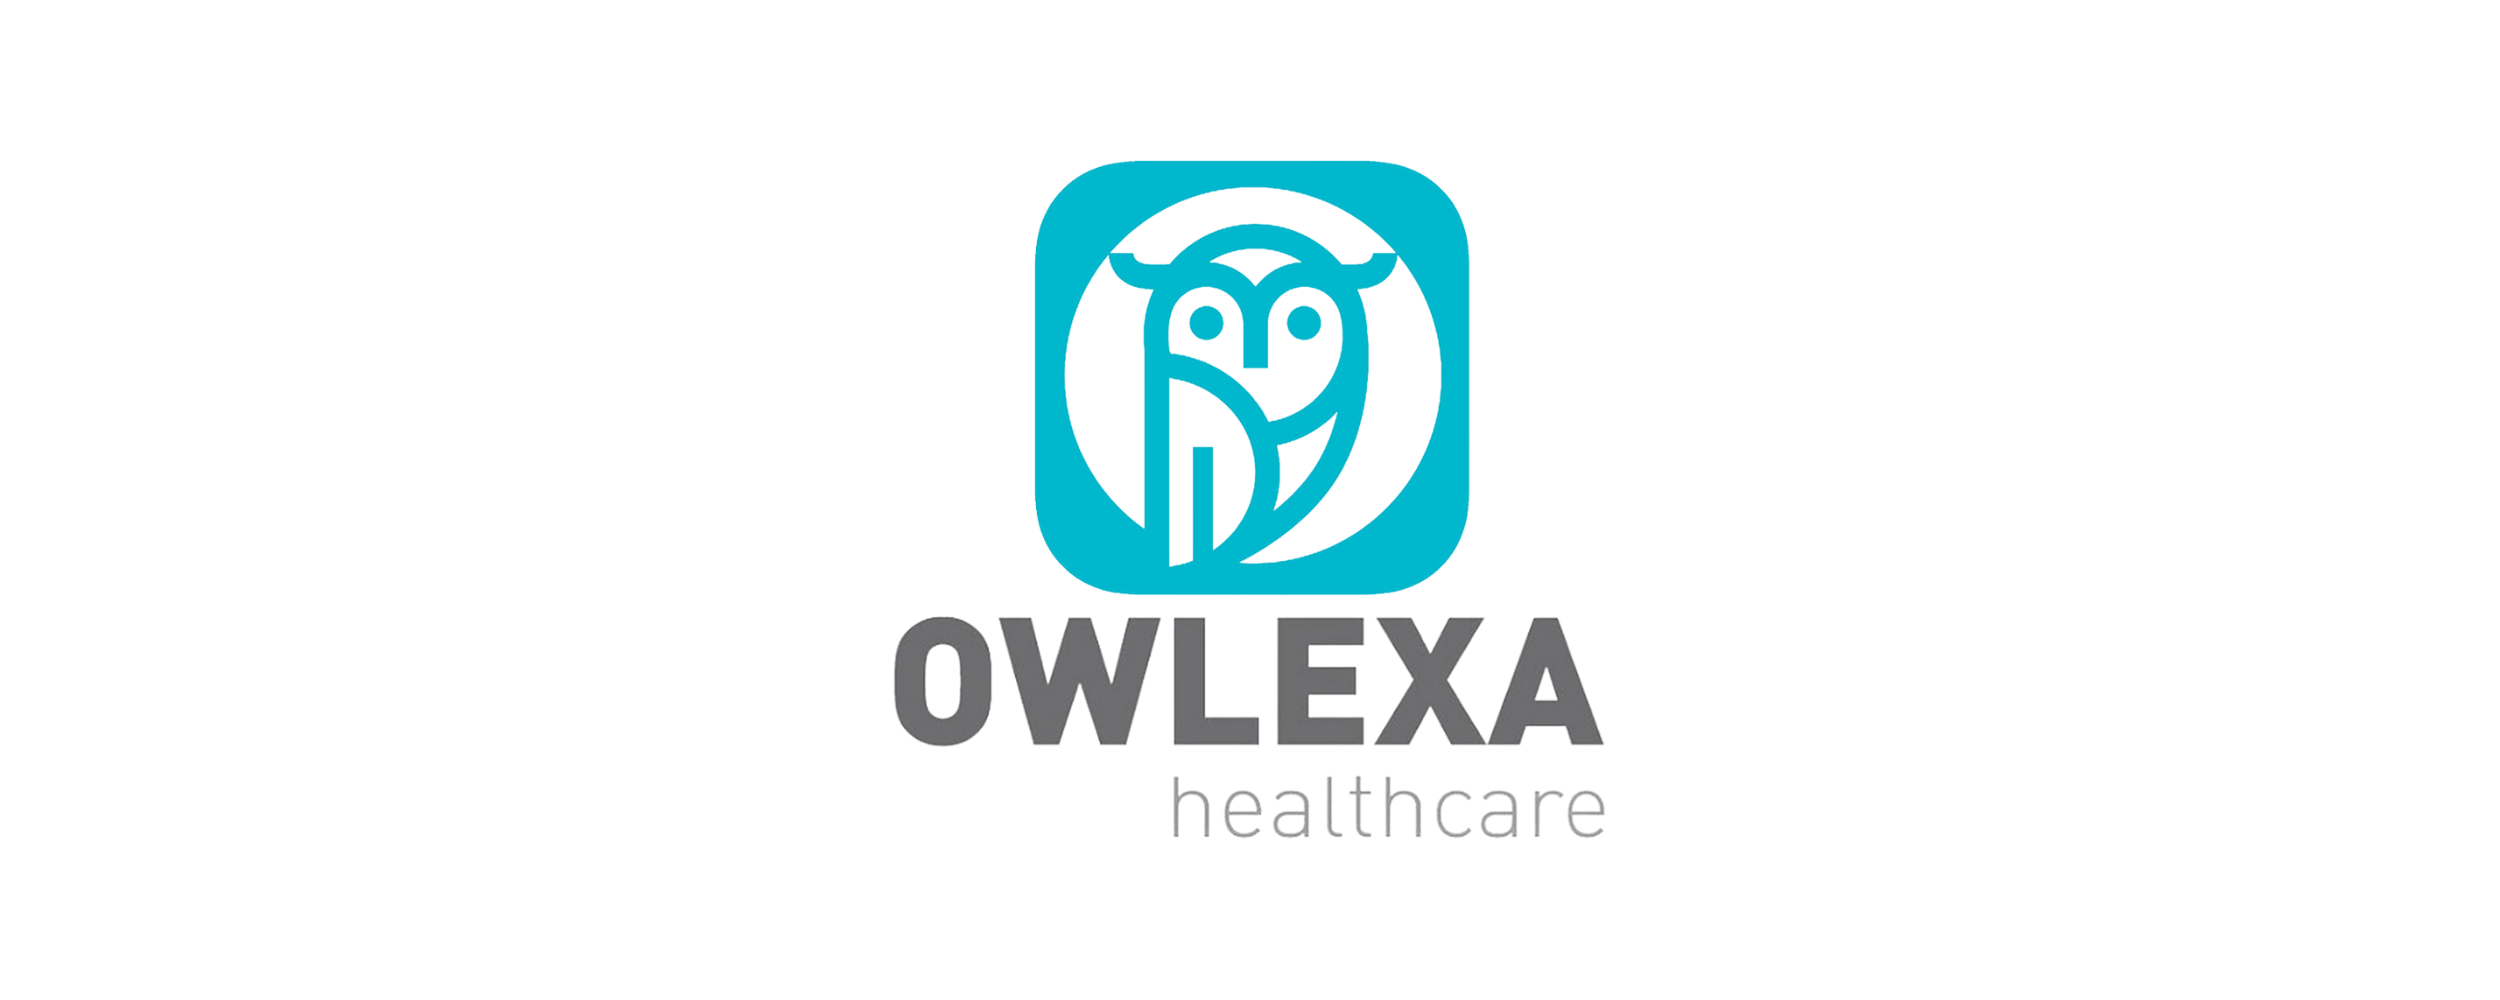 OWLEXA HEALTH CARE